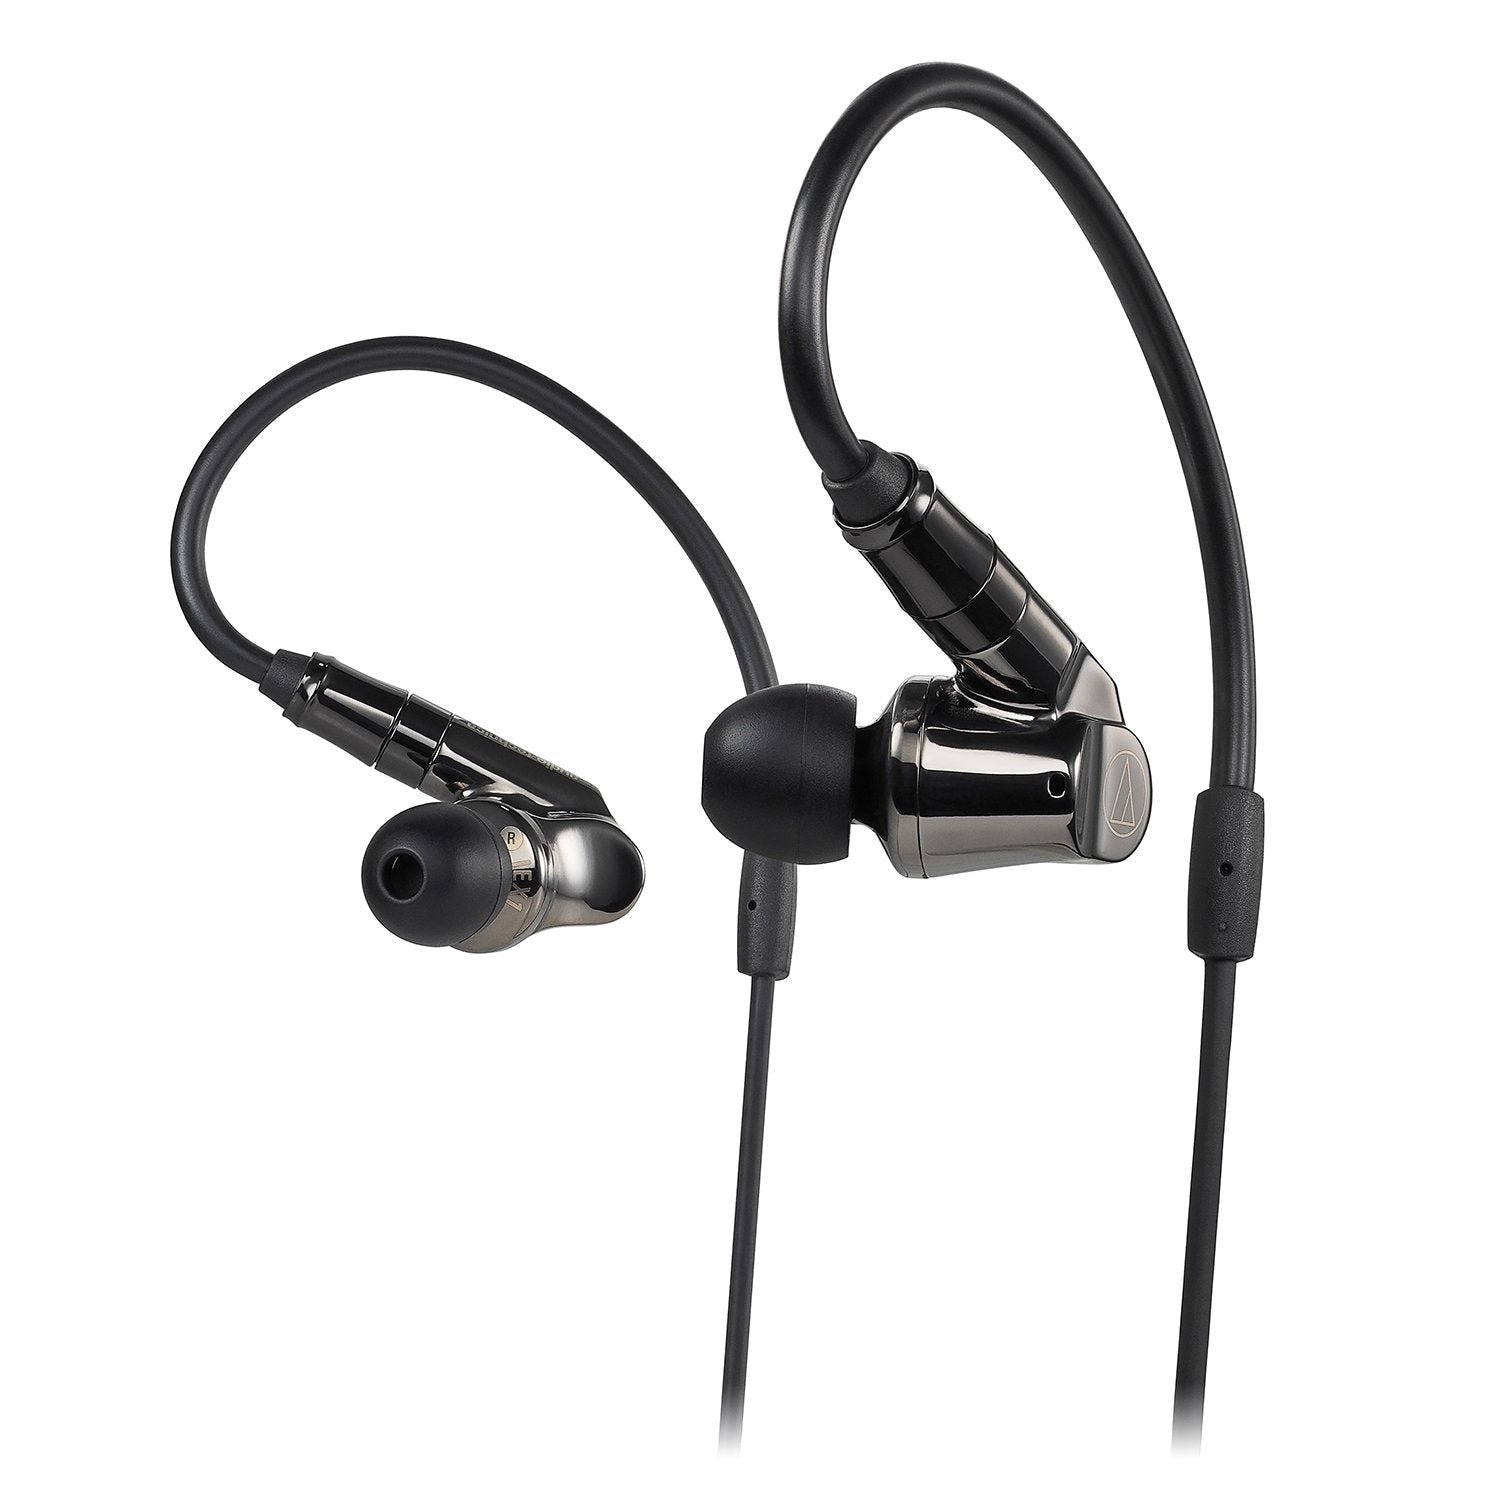 Audio Technica - ATH-IEX1 - Hybrid In-Ear Headphones Australia